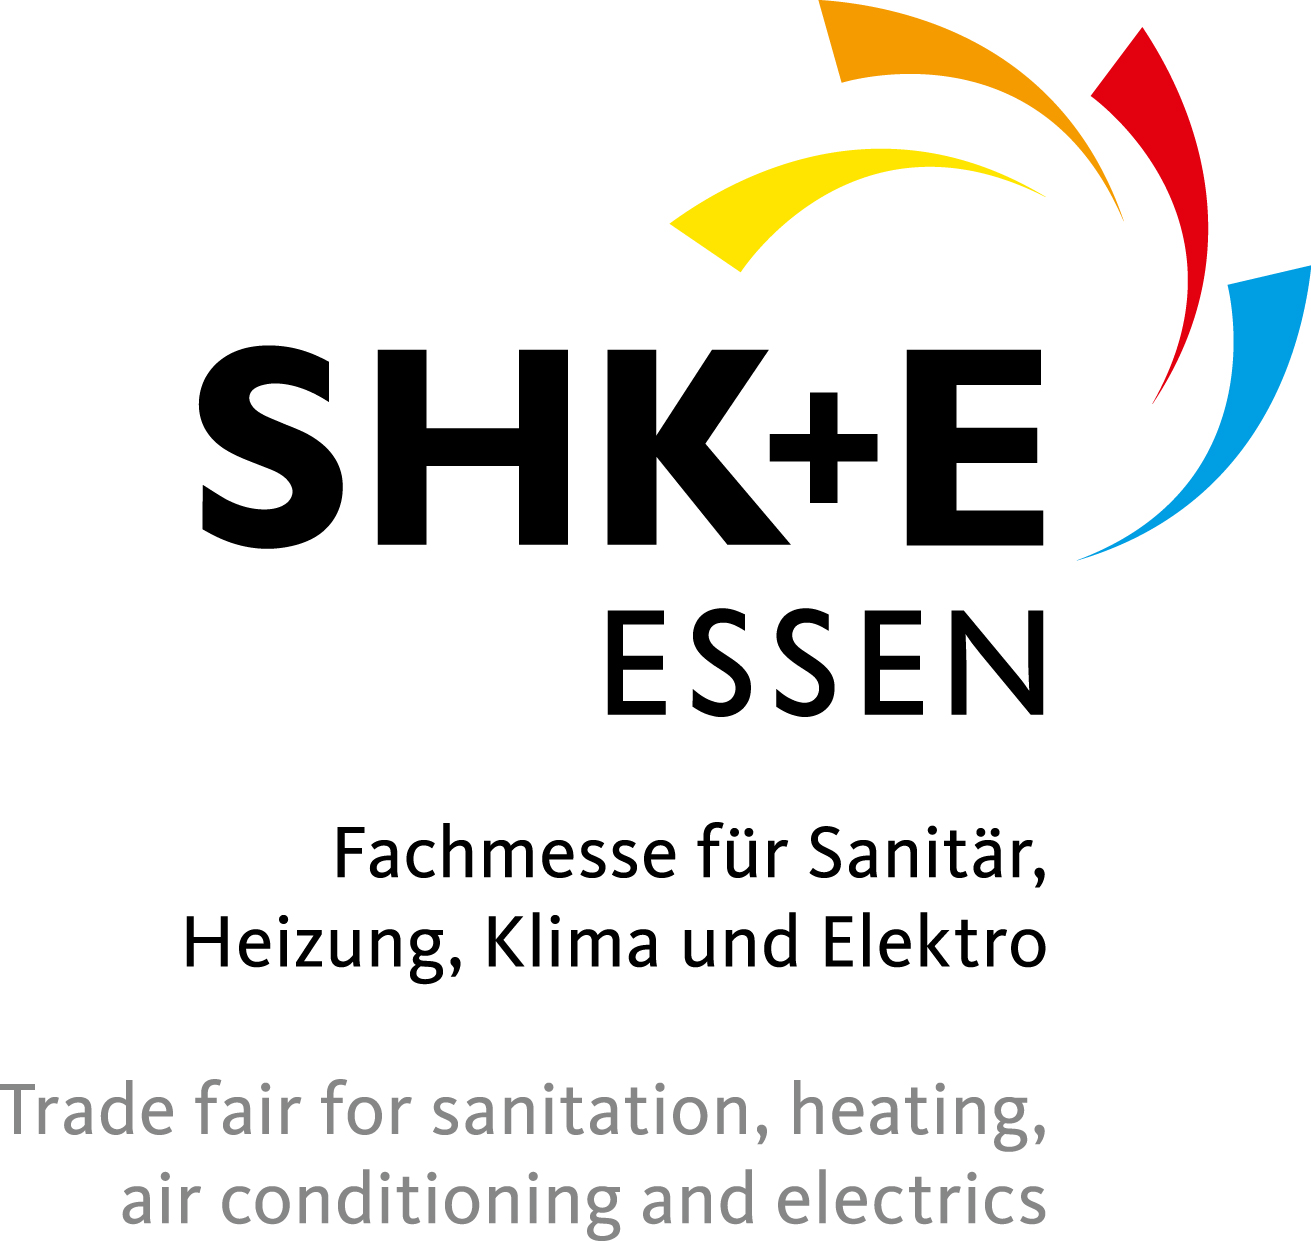 SHK+E ESSEN with claim (German, English)